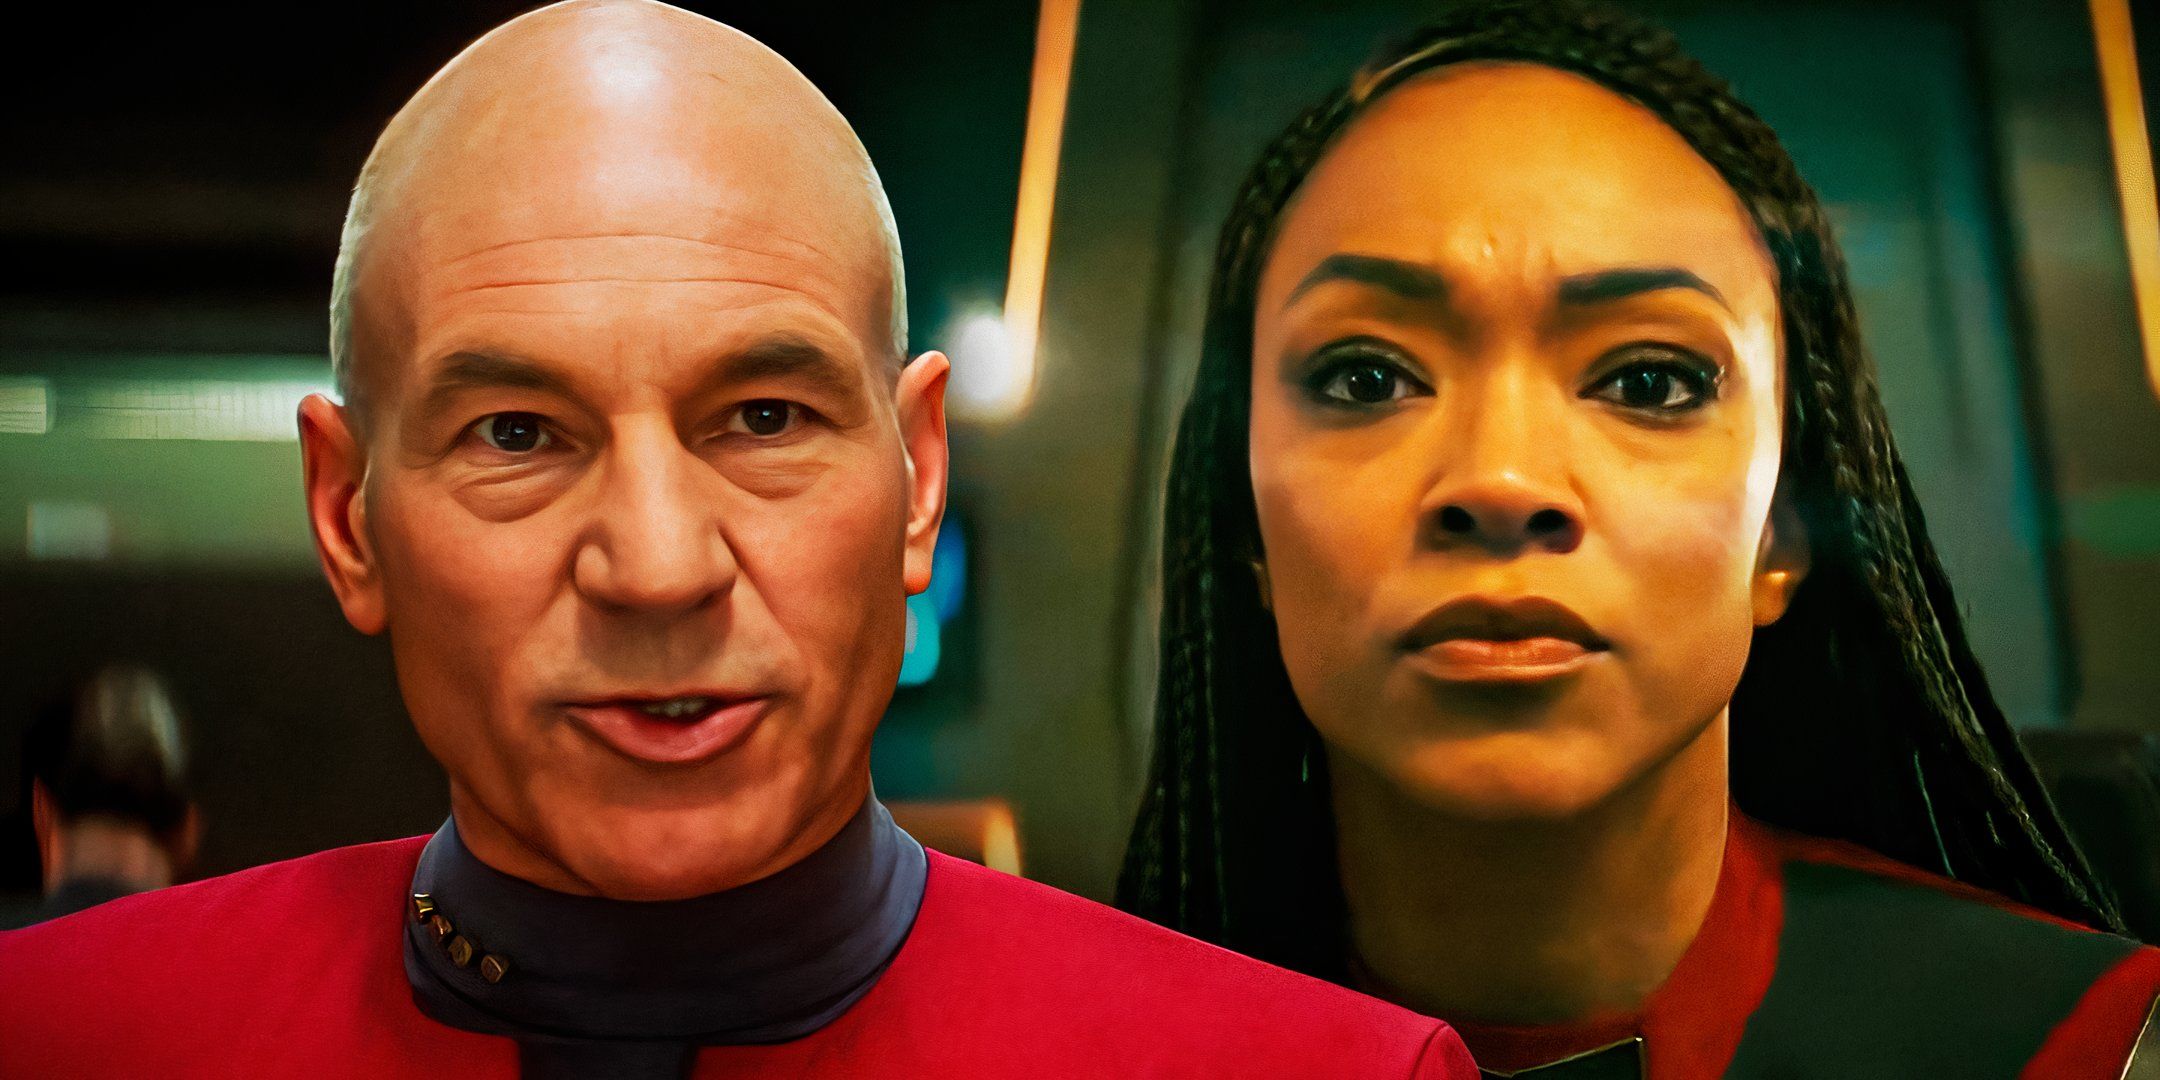 Patrick Stewart as Captain Picard in Star Trek Generations and Captain Burnham in Star Trek Discovery.